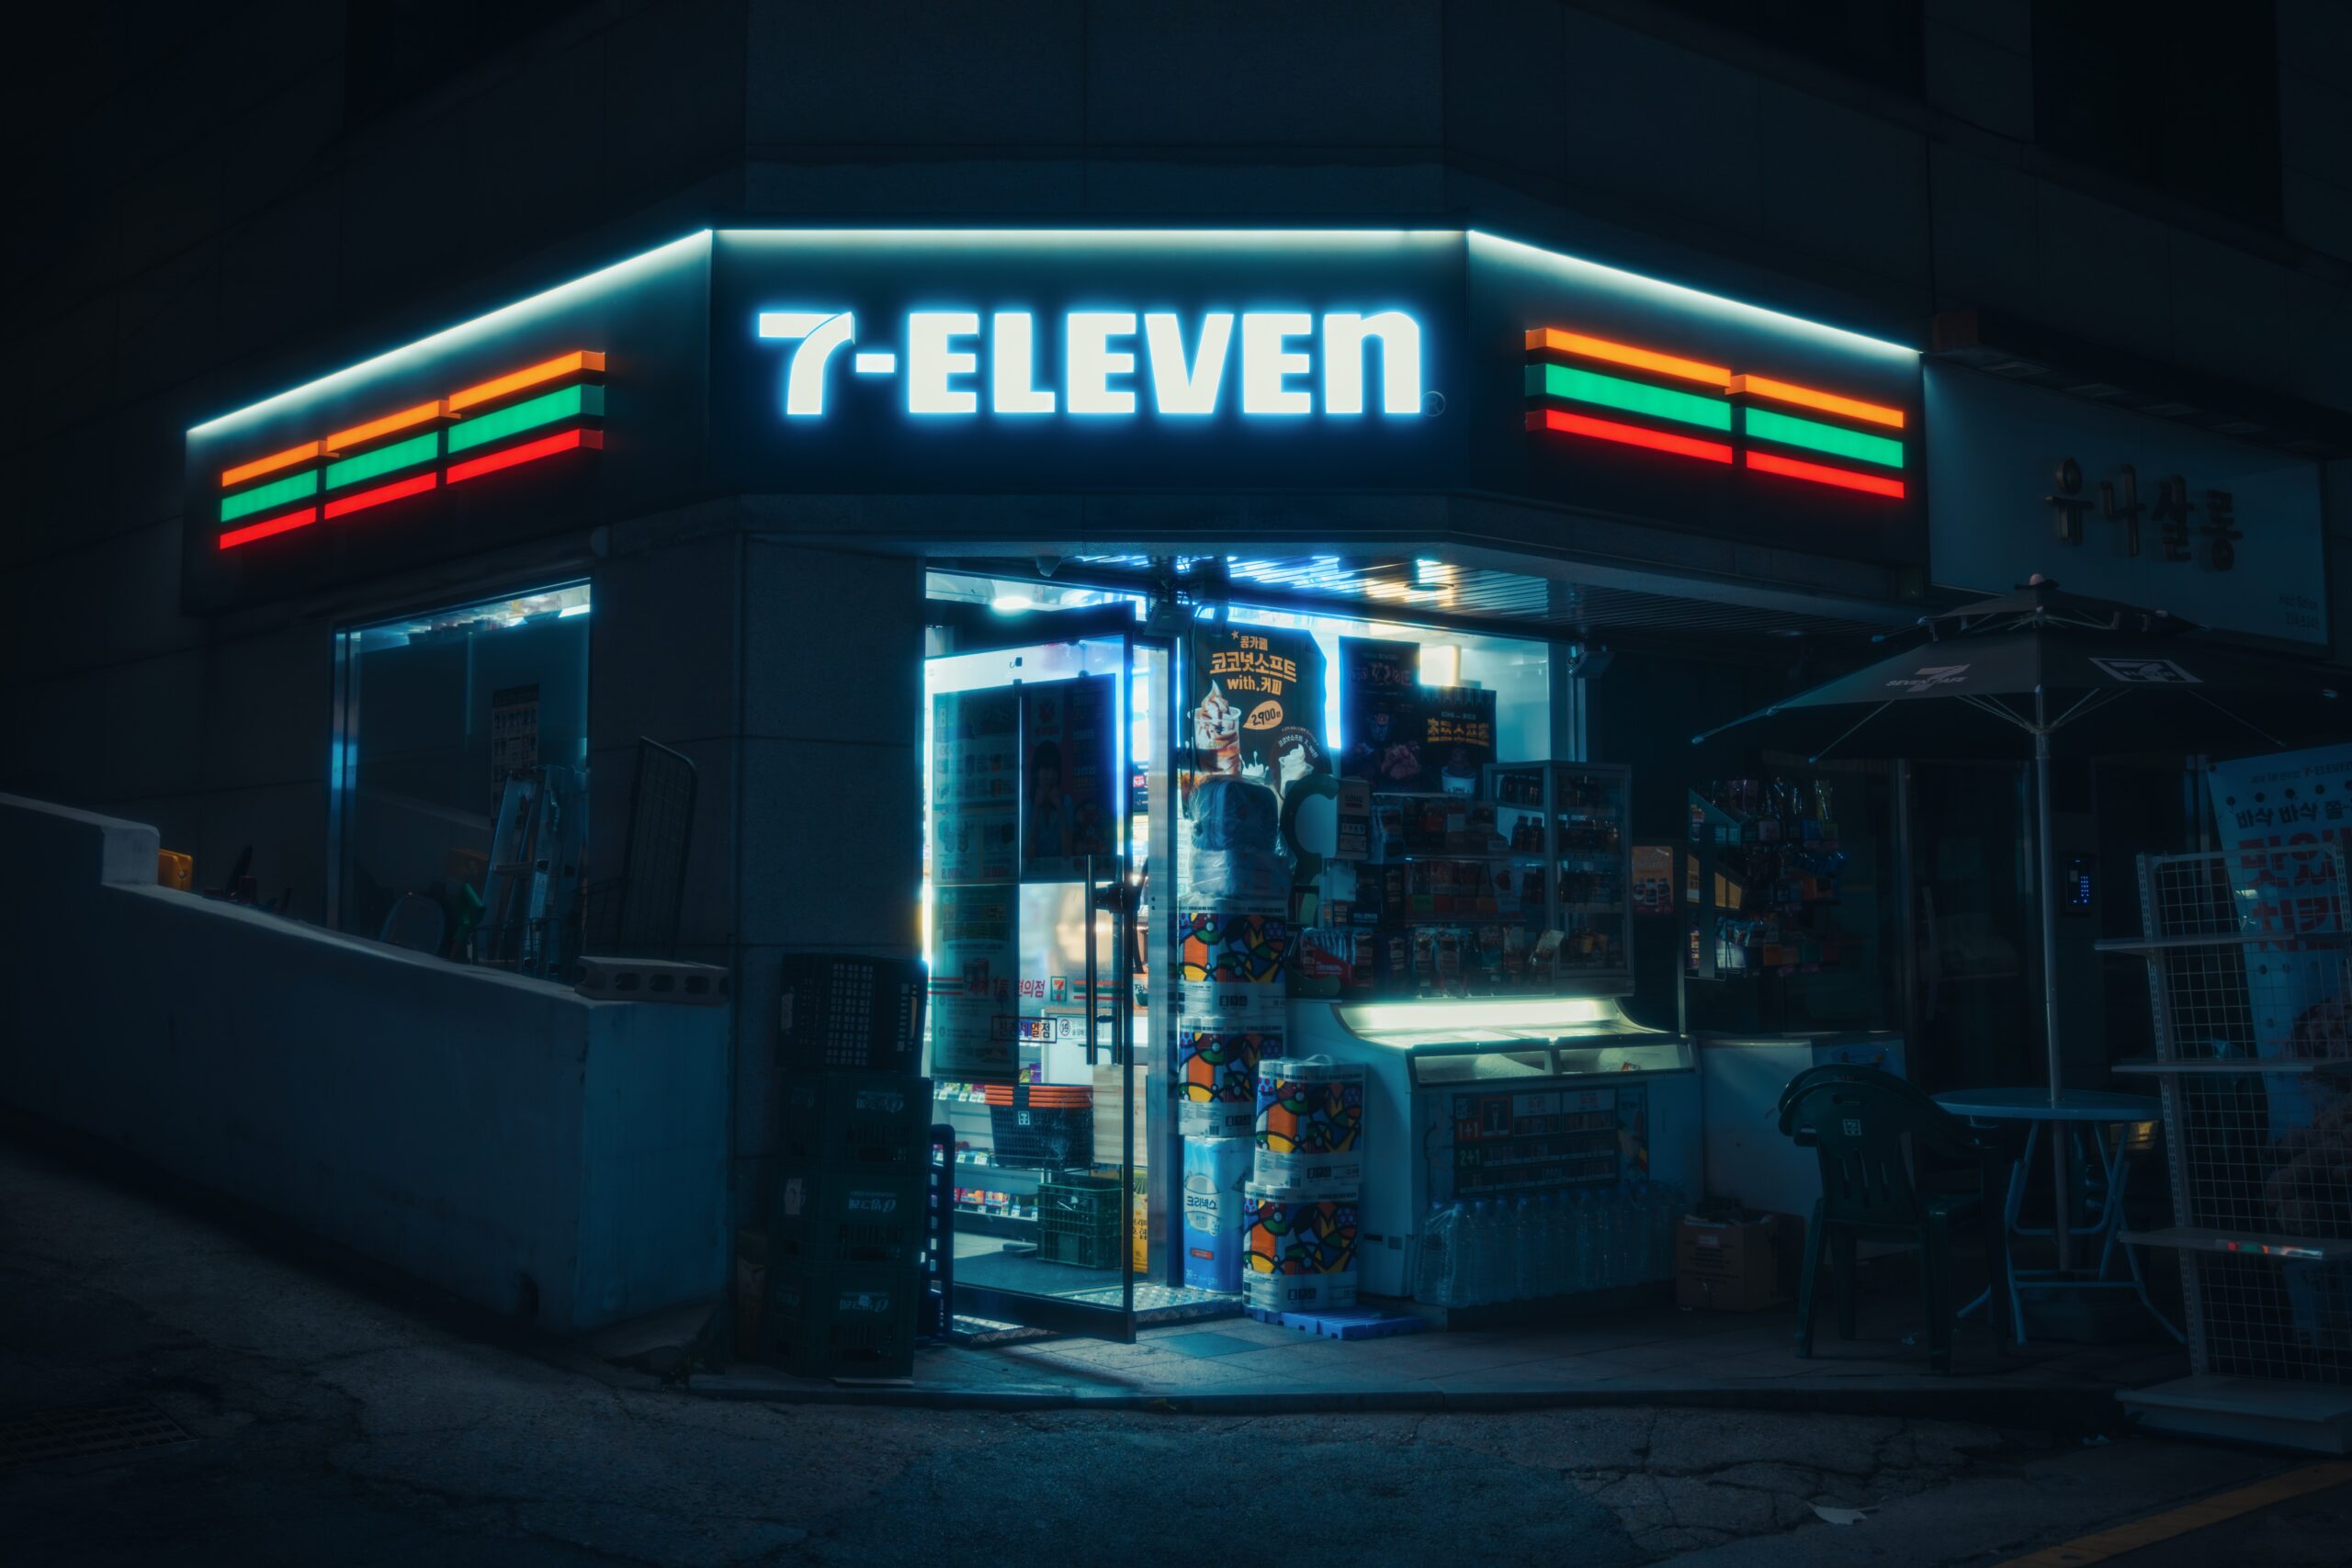 andrea-de-santis unsplash royalty free photo of 7-Eleven in Korea